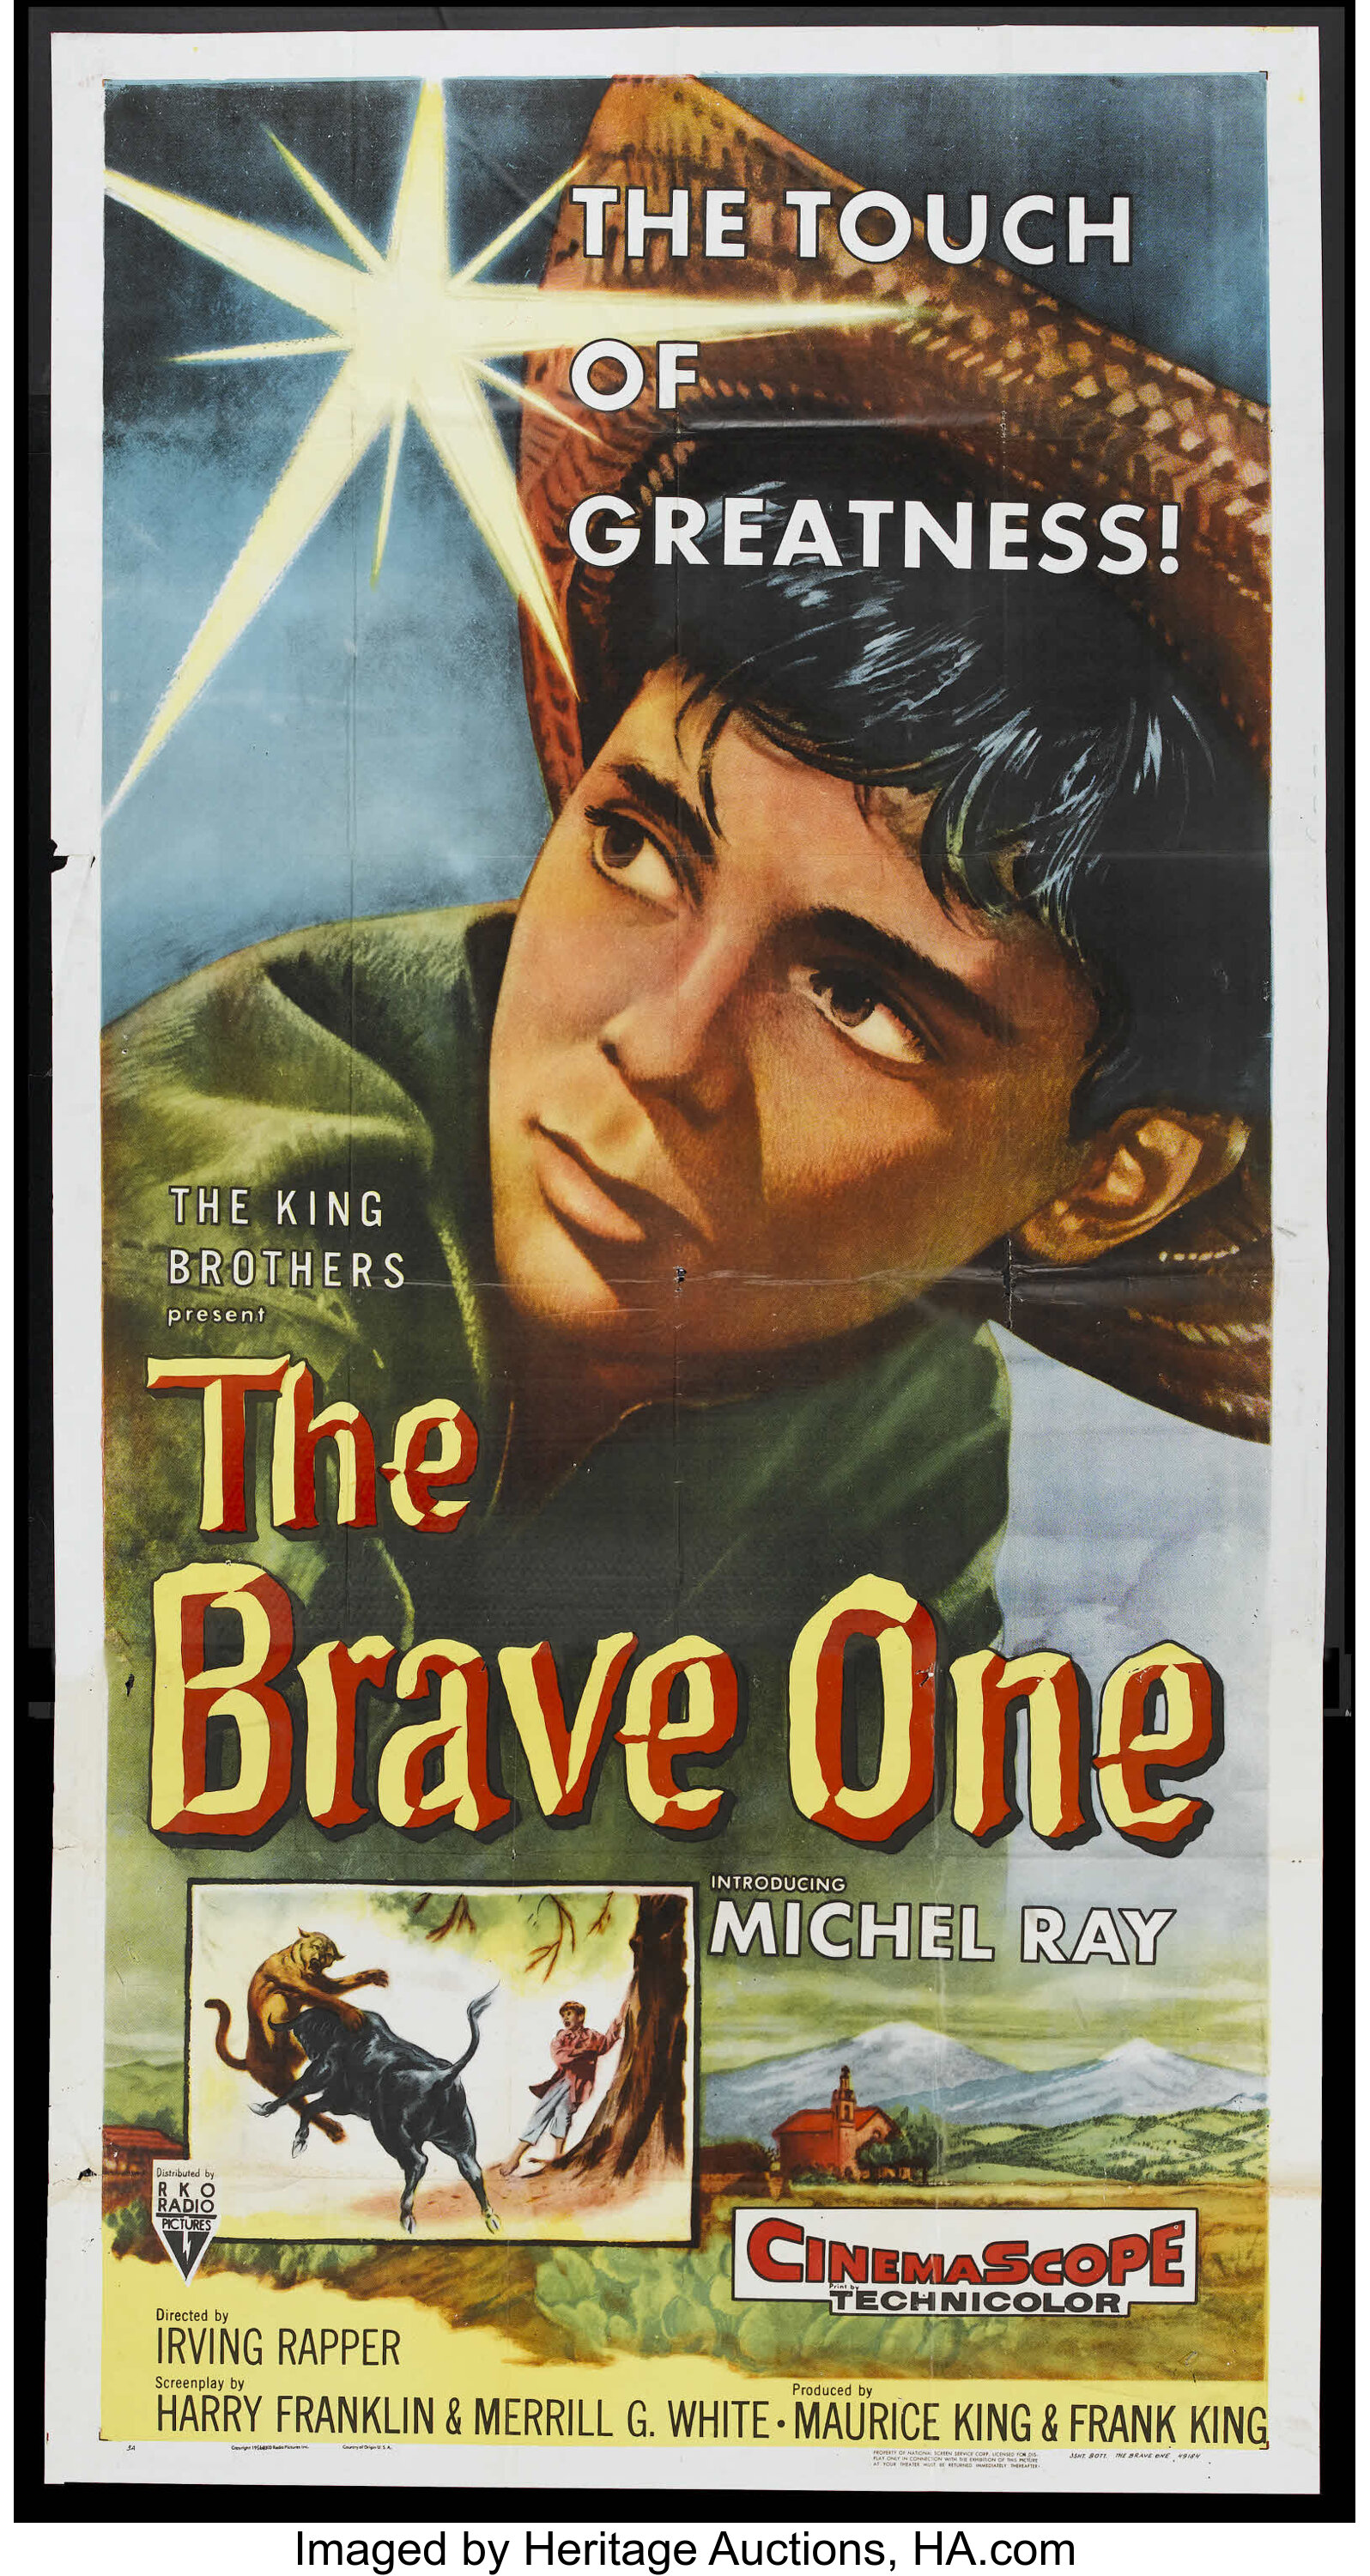 The Brave One (1956) — Drama Color / Michel Ray, Rodolfo Hoyos, Elsa  Cárdenas, Carlos Navarro 